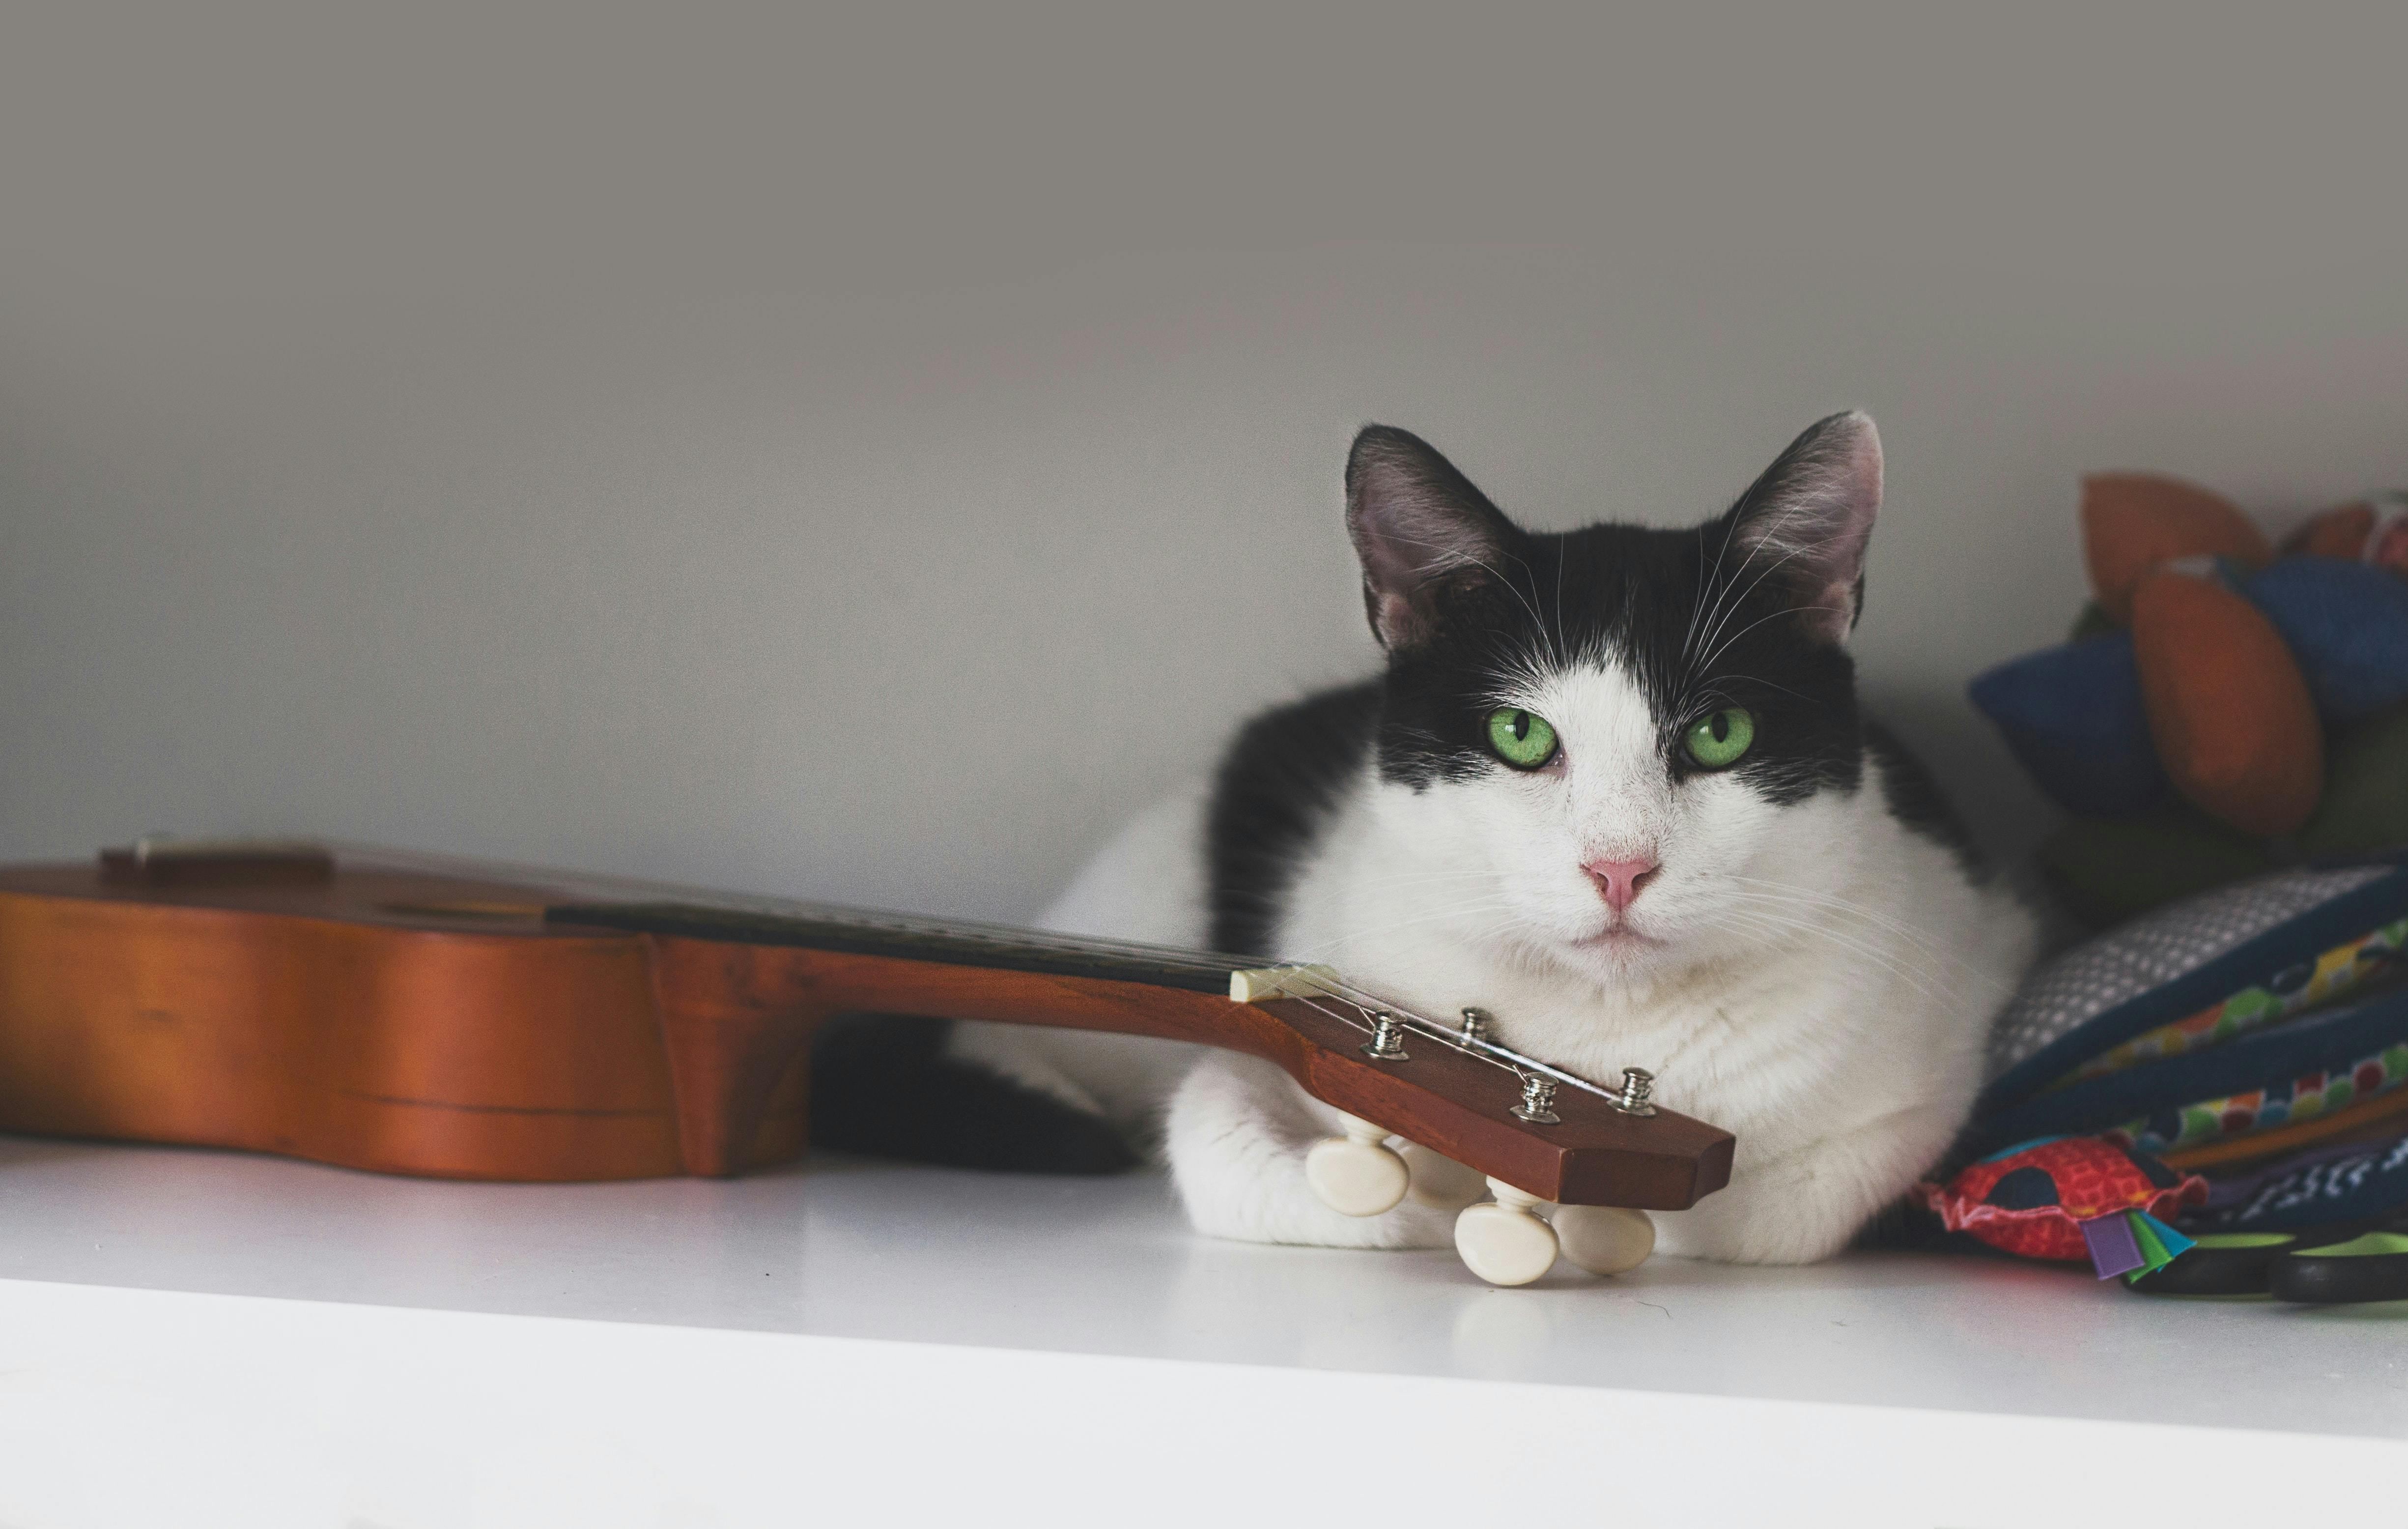 Cat laying next to an ukulele.